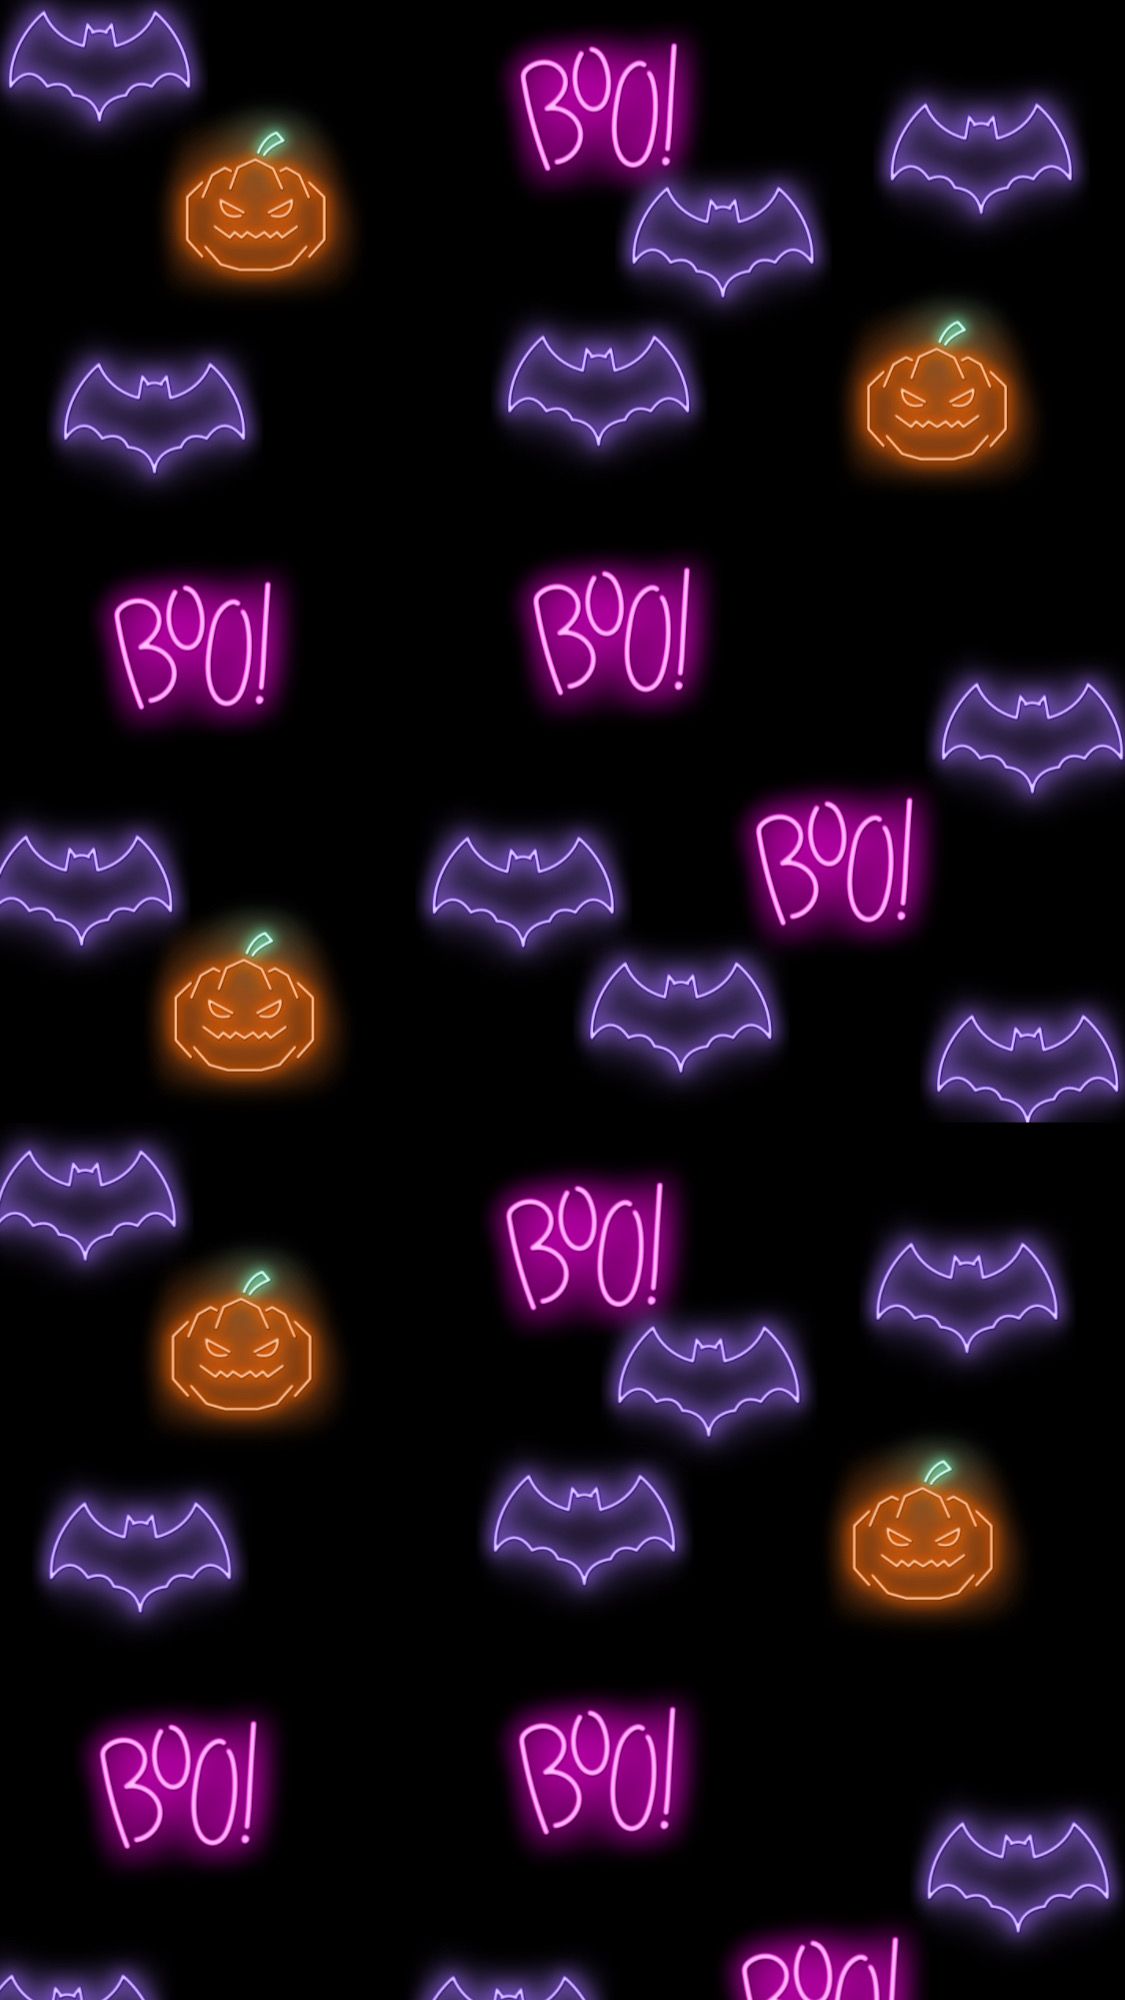 Neon Halloween Wallpaper. Halloween wallpaper iphone background, Halloween wallpaper iphone, Halloween wallpaper cute